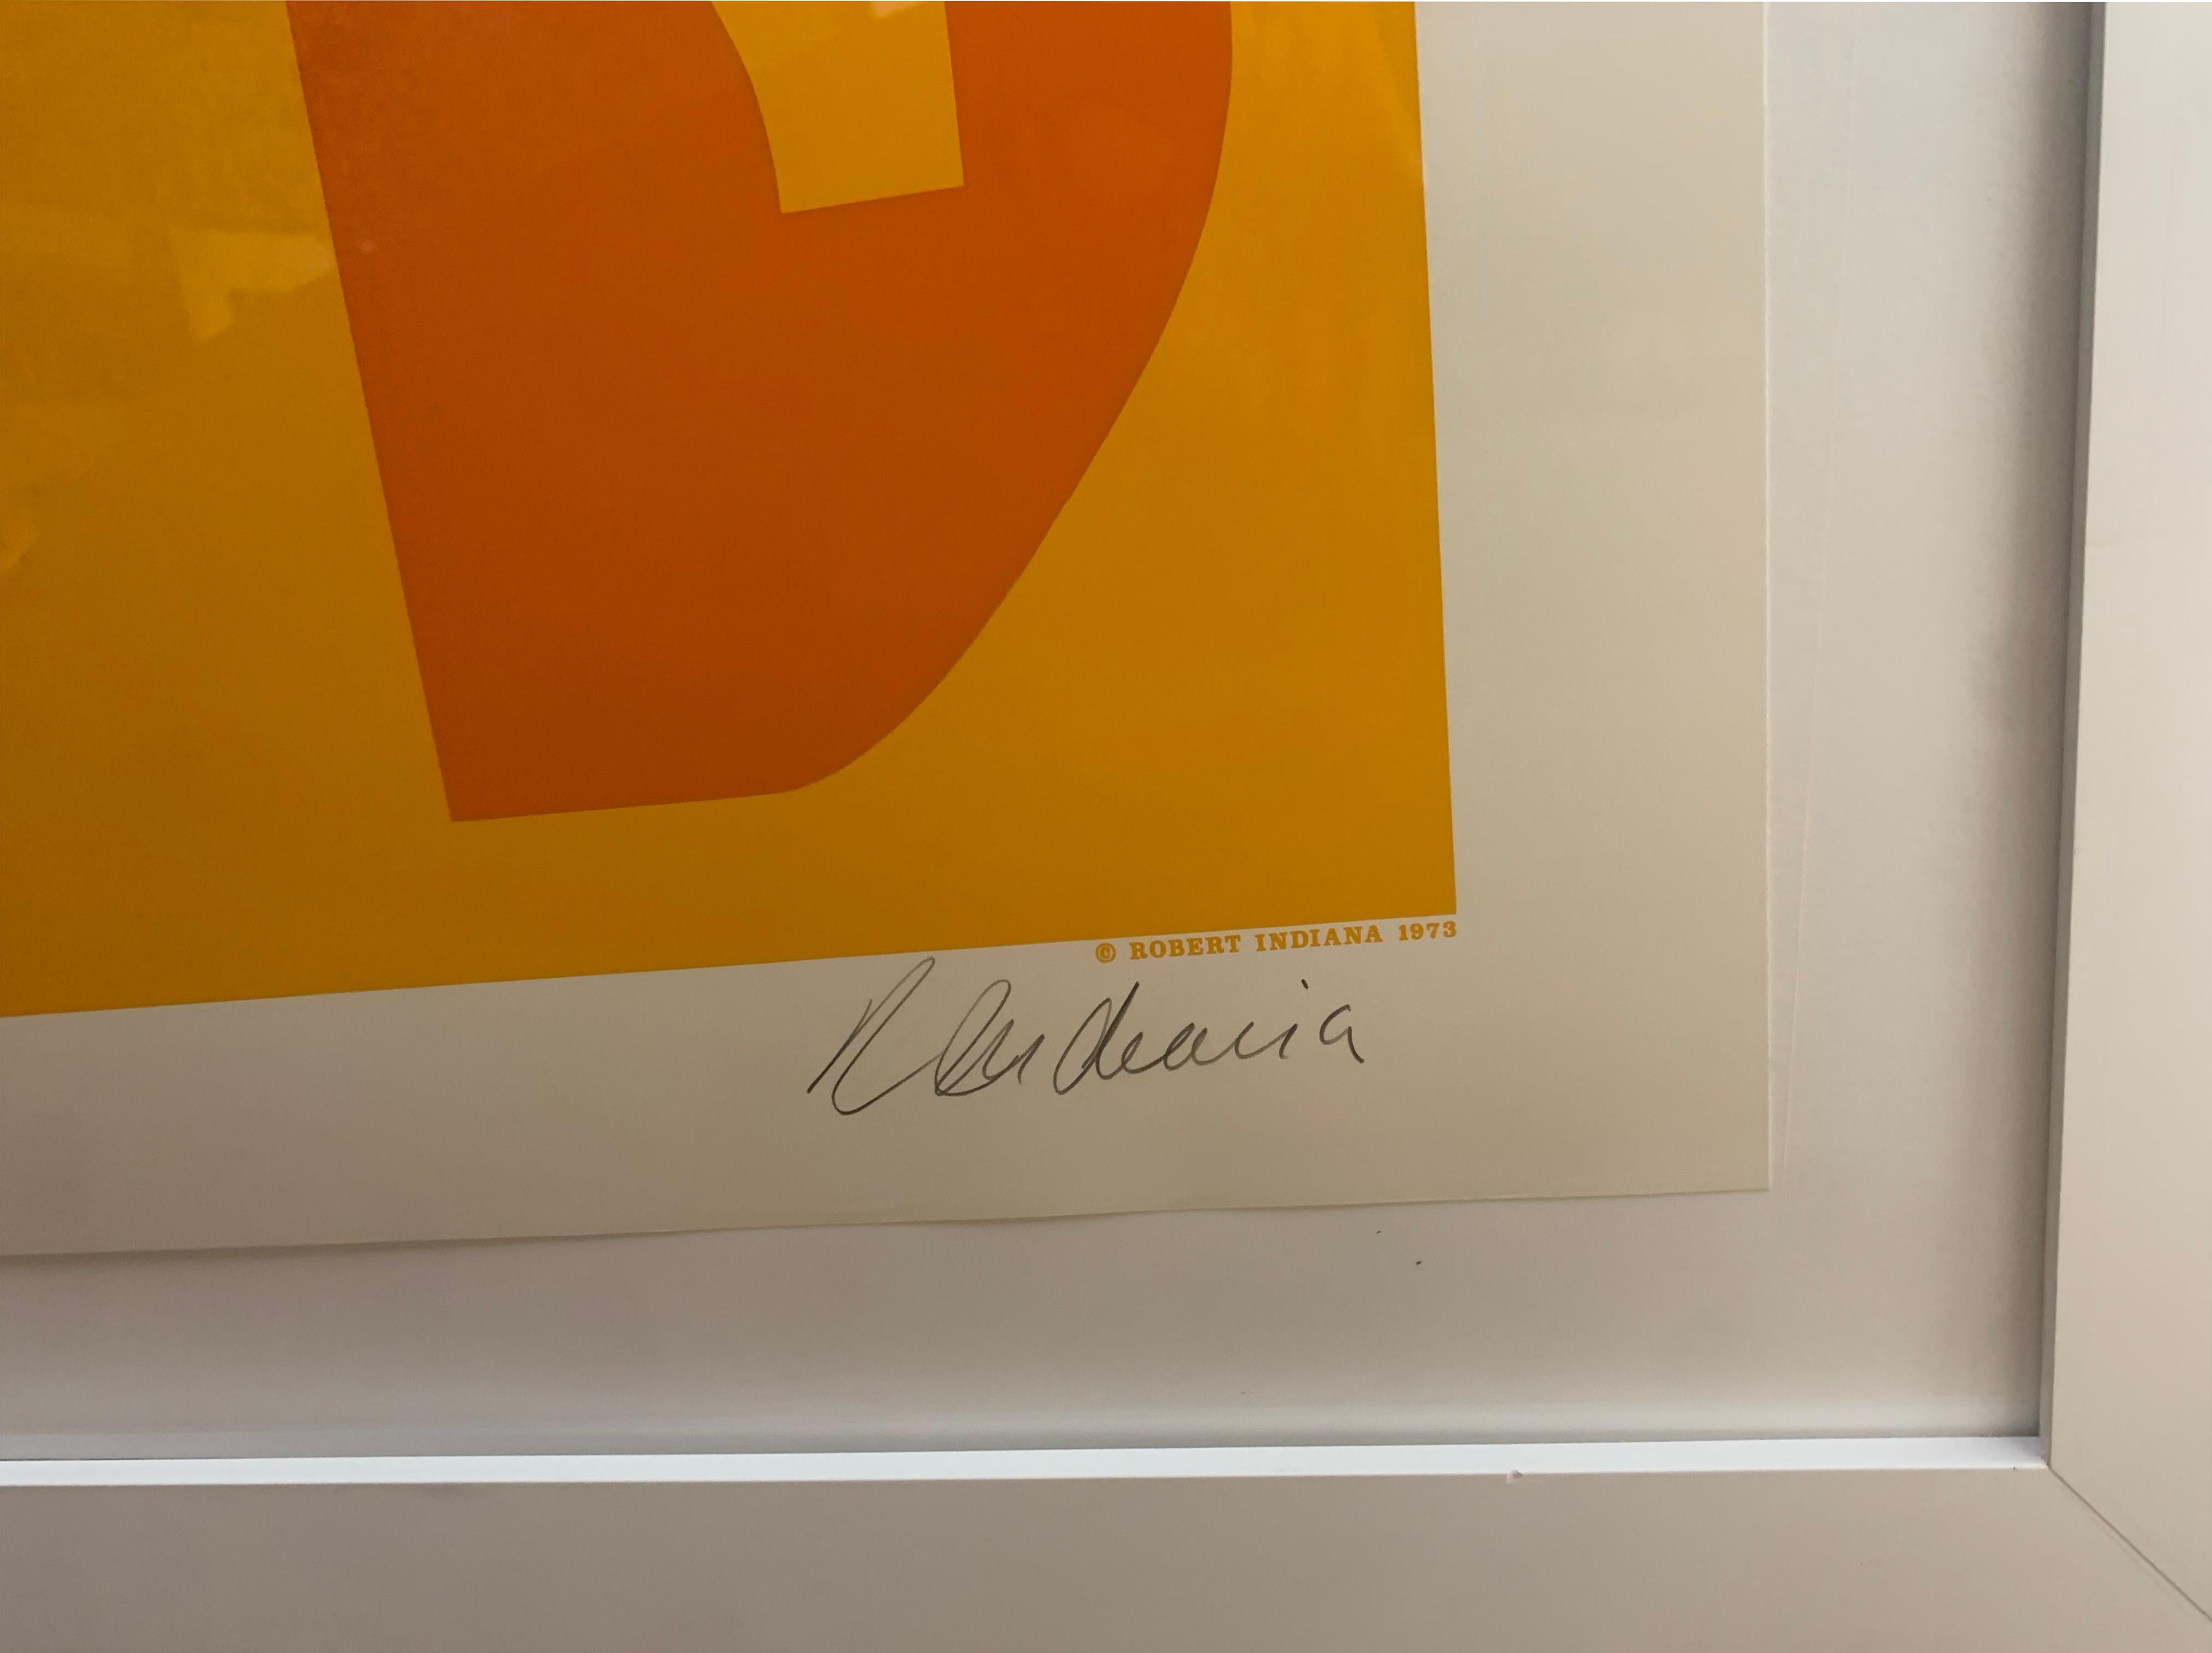 Artist: Robert Indiana
Title: Golden Love
Medium: Screenprint in colors on wove paper
Size: 35.13 x 35.13